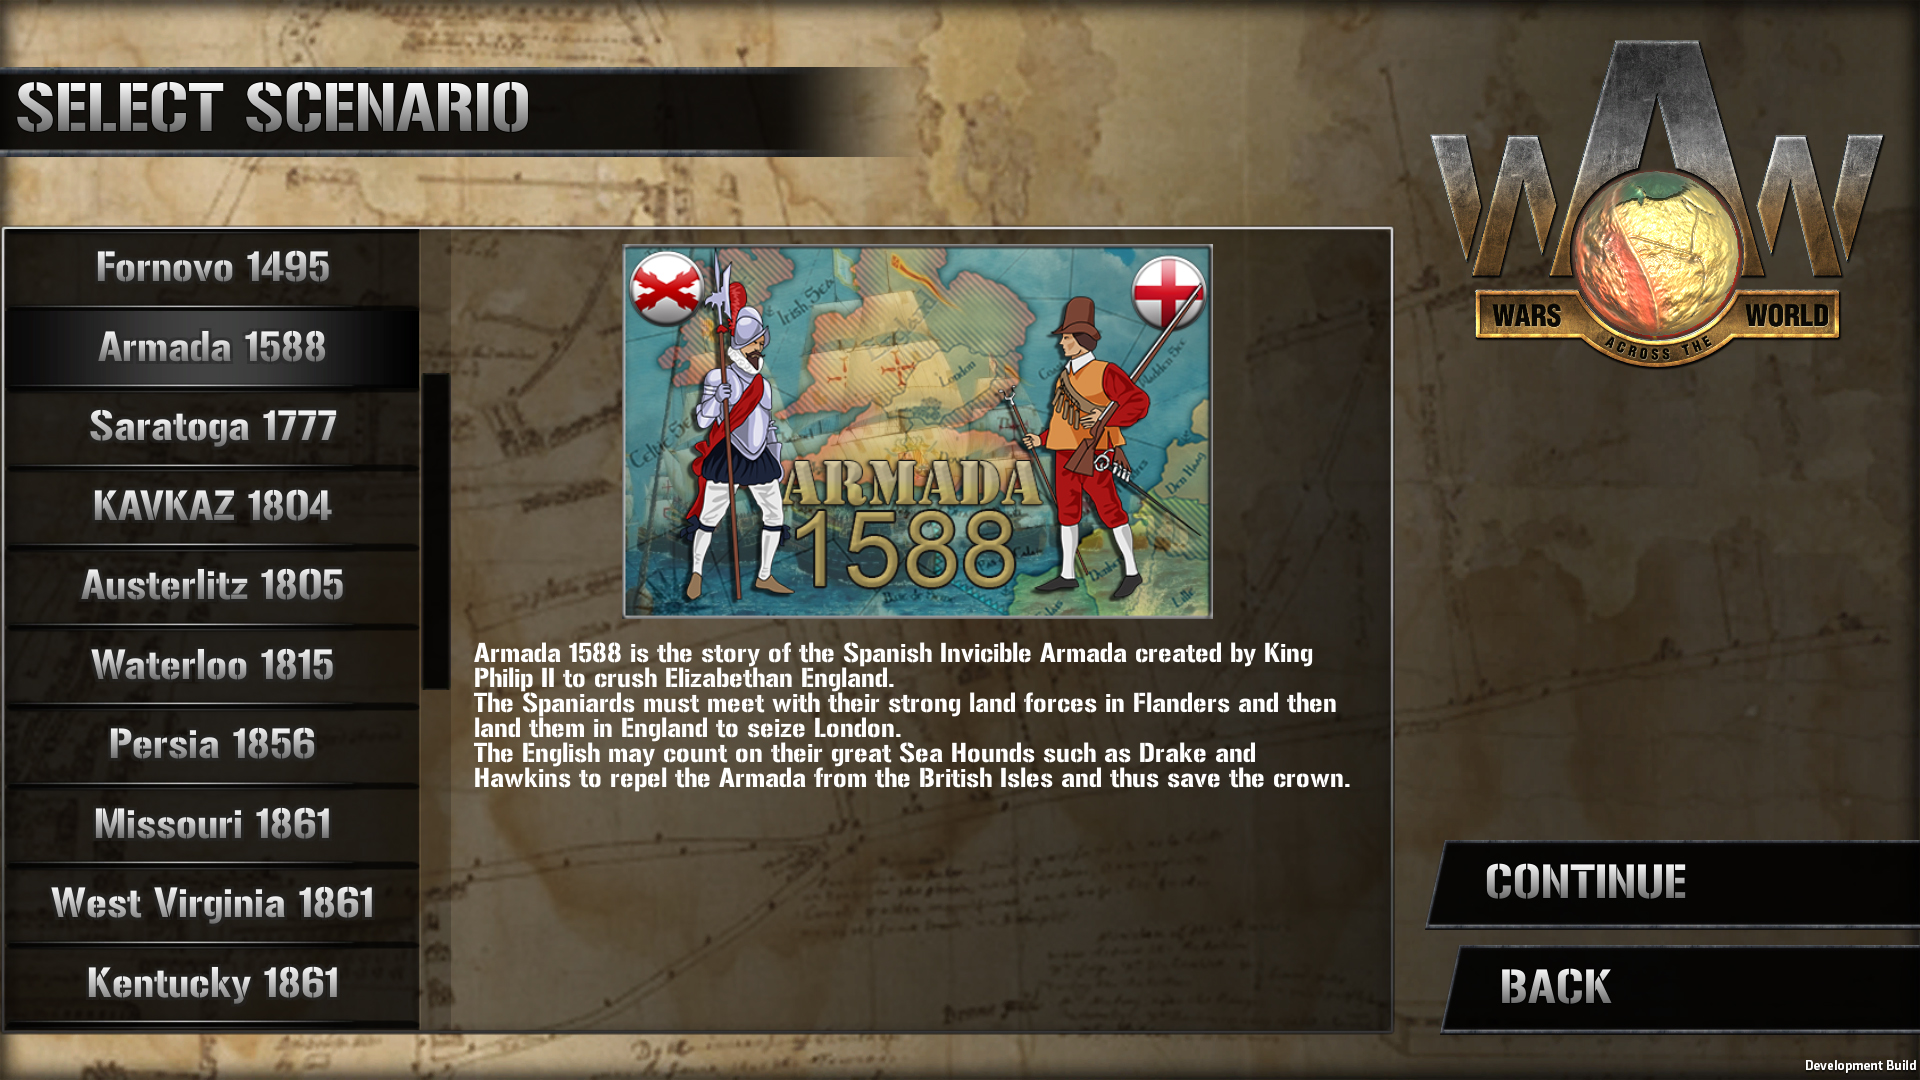 Wars Across the World: Armada 1588 Featured Screenshot #1